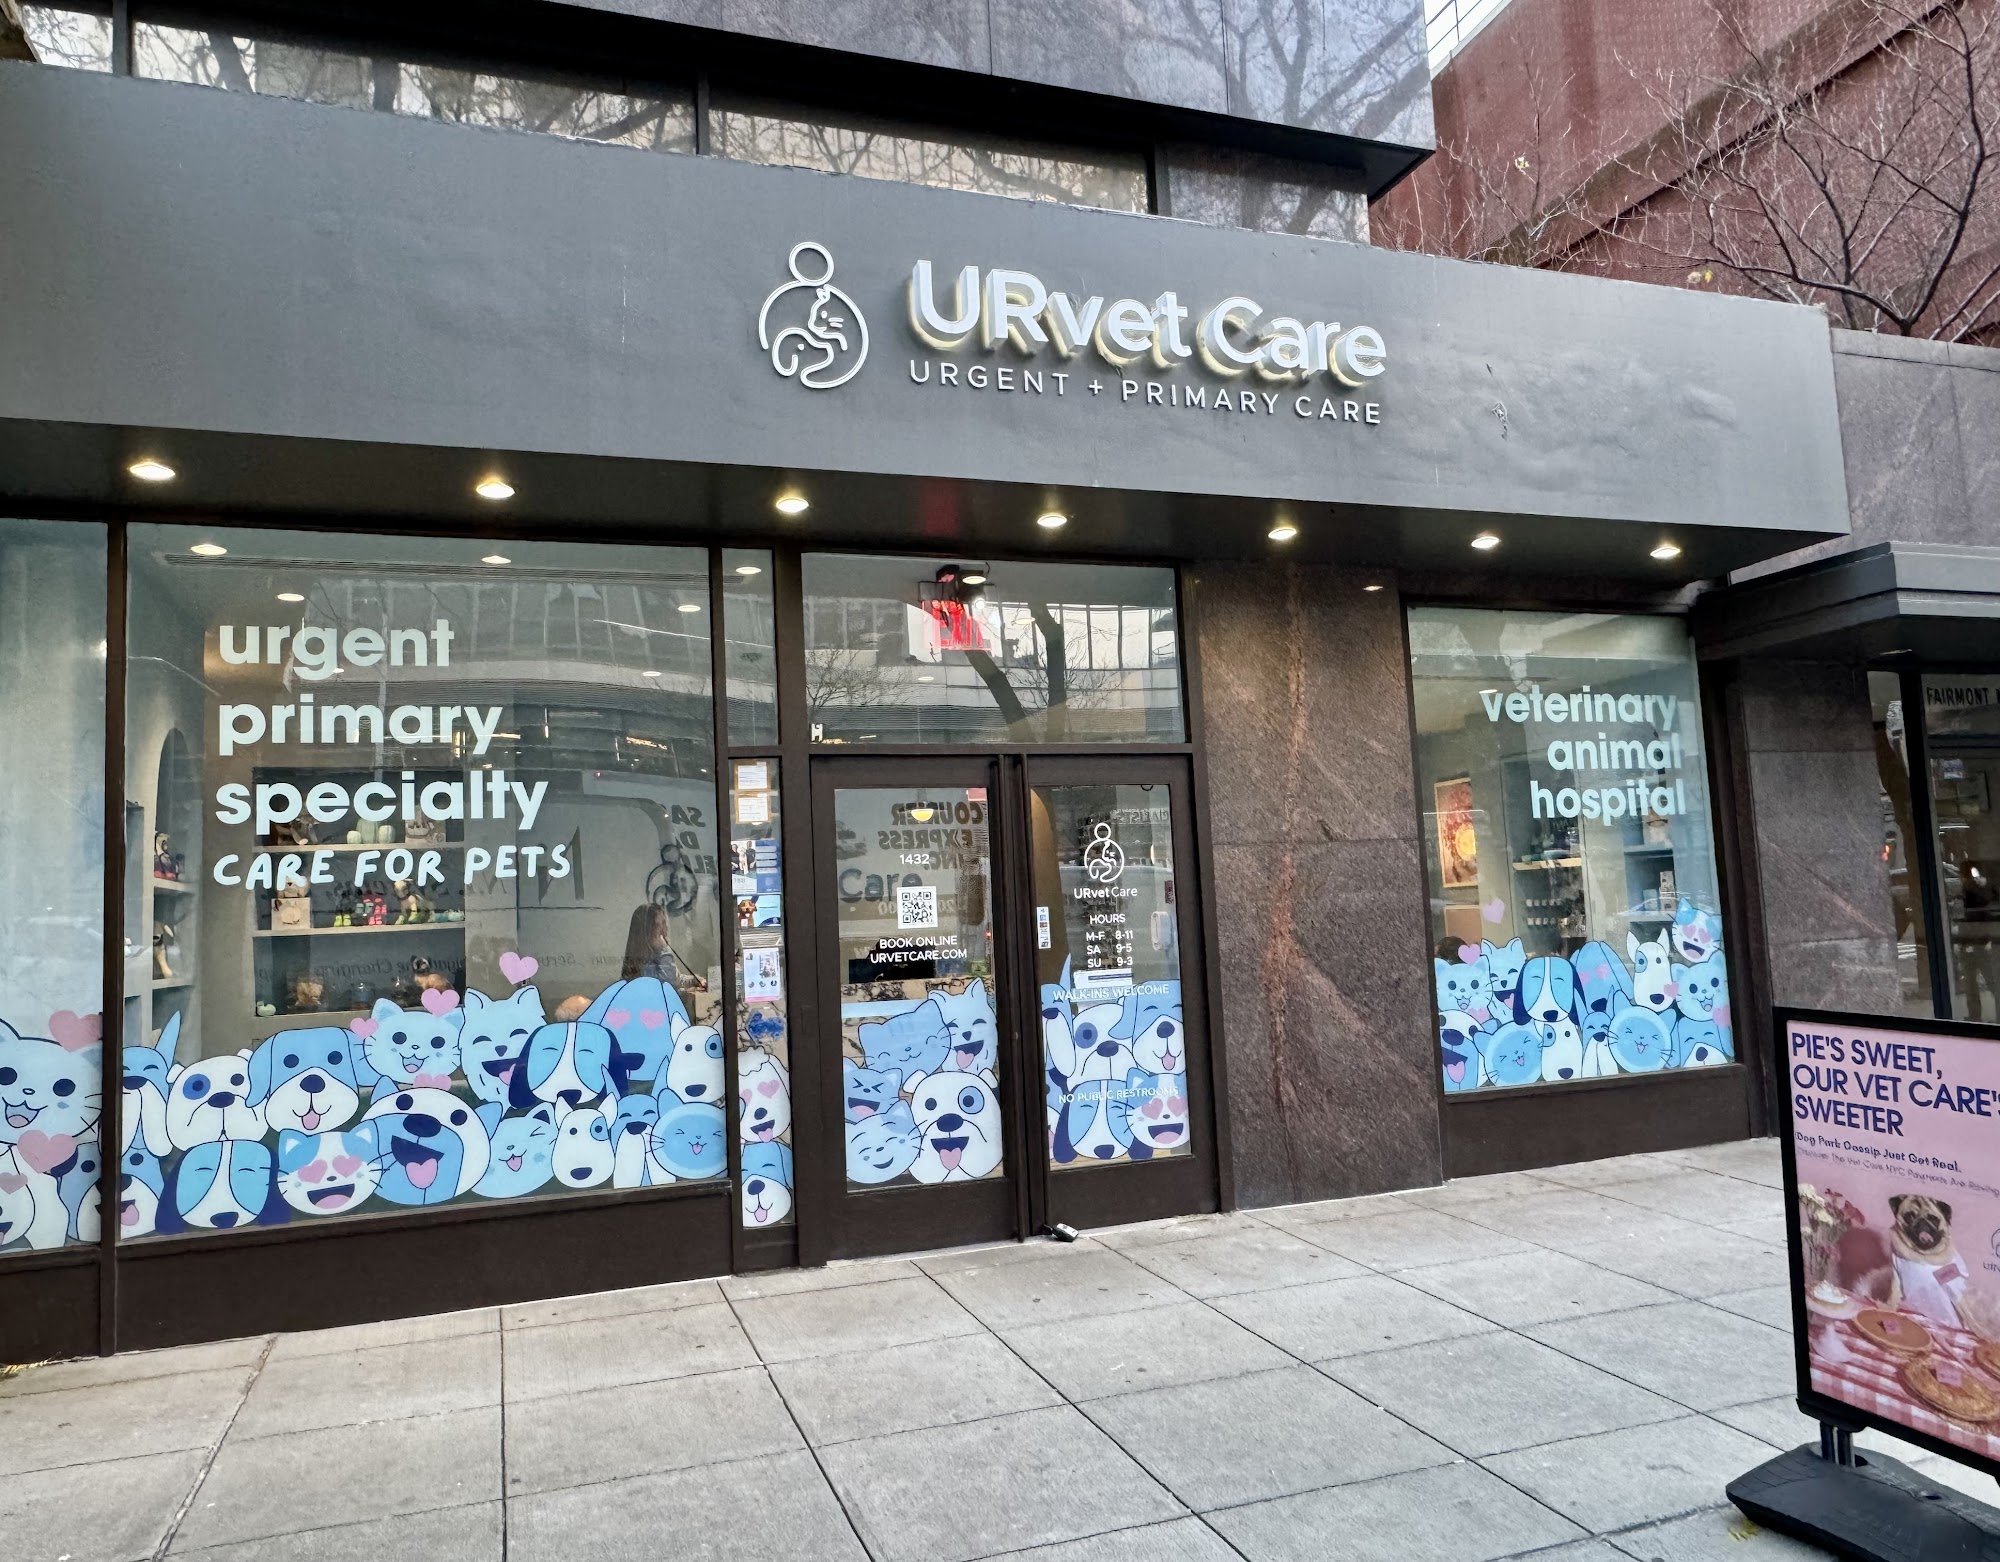 URvet Care - Upper East Side Urgent, Primary & Speciality Upper East Side Veterinarian